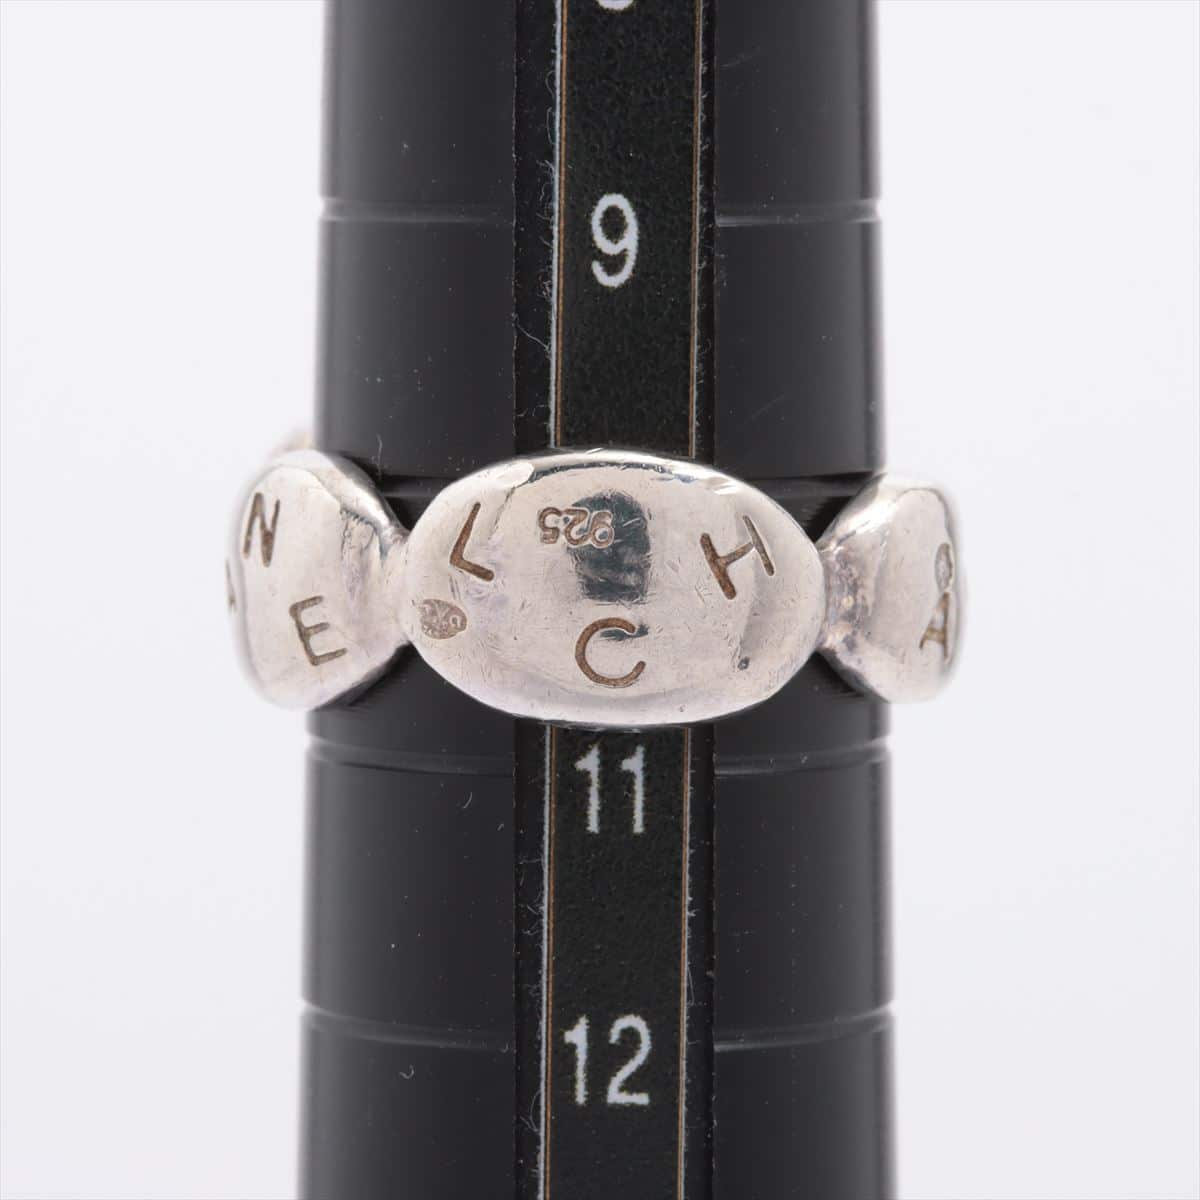 Chanel Logo rings 925 5.5g Silver